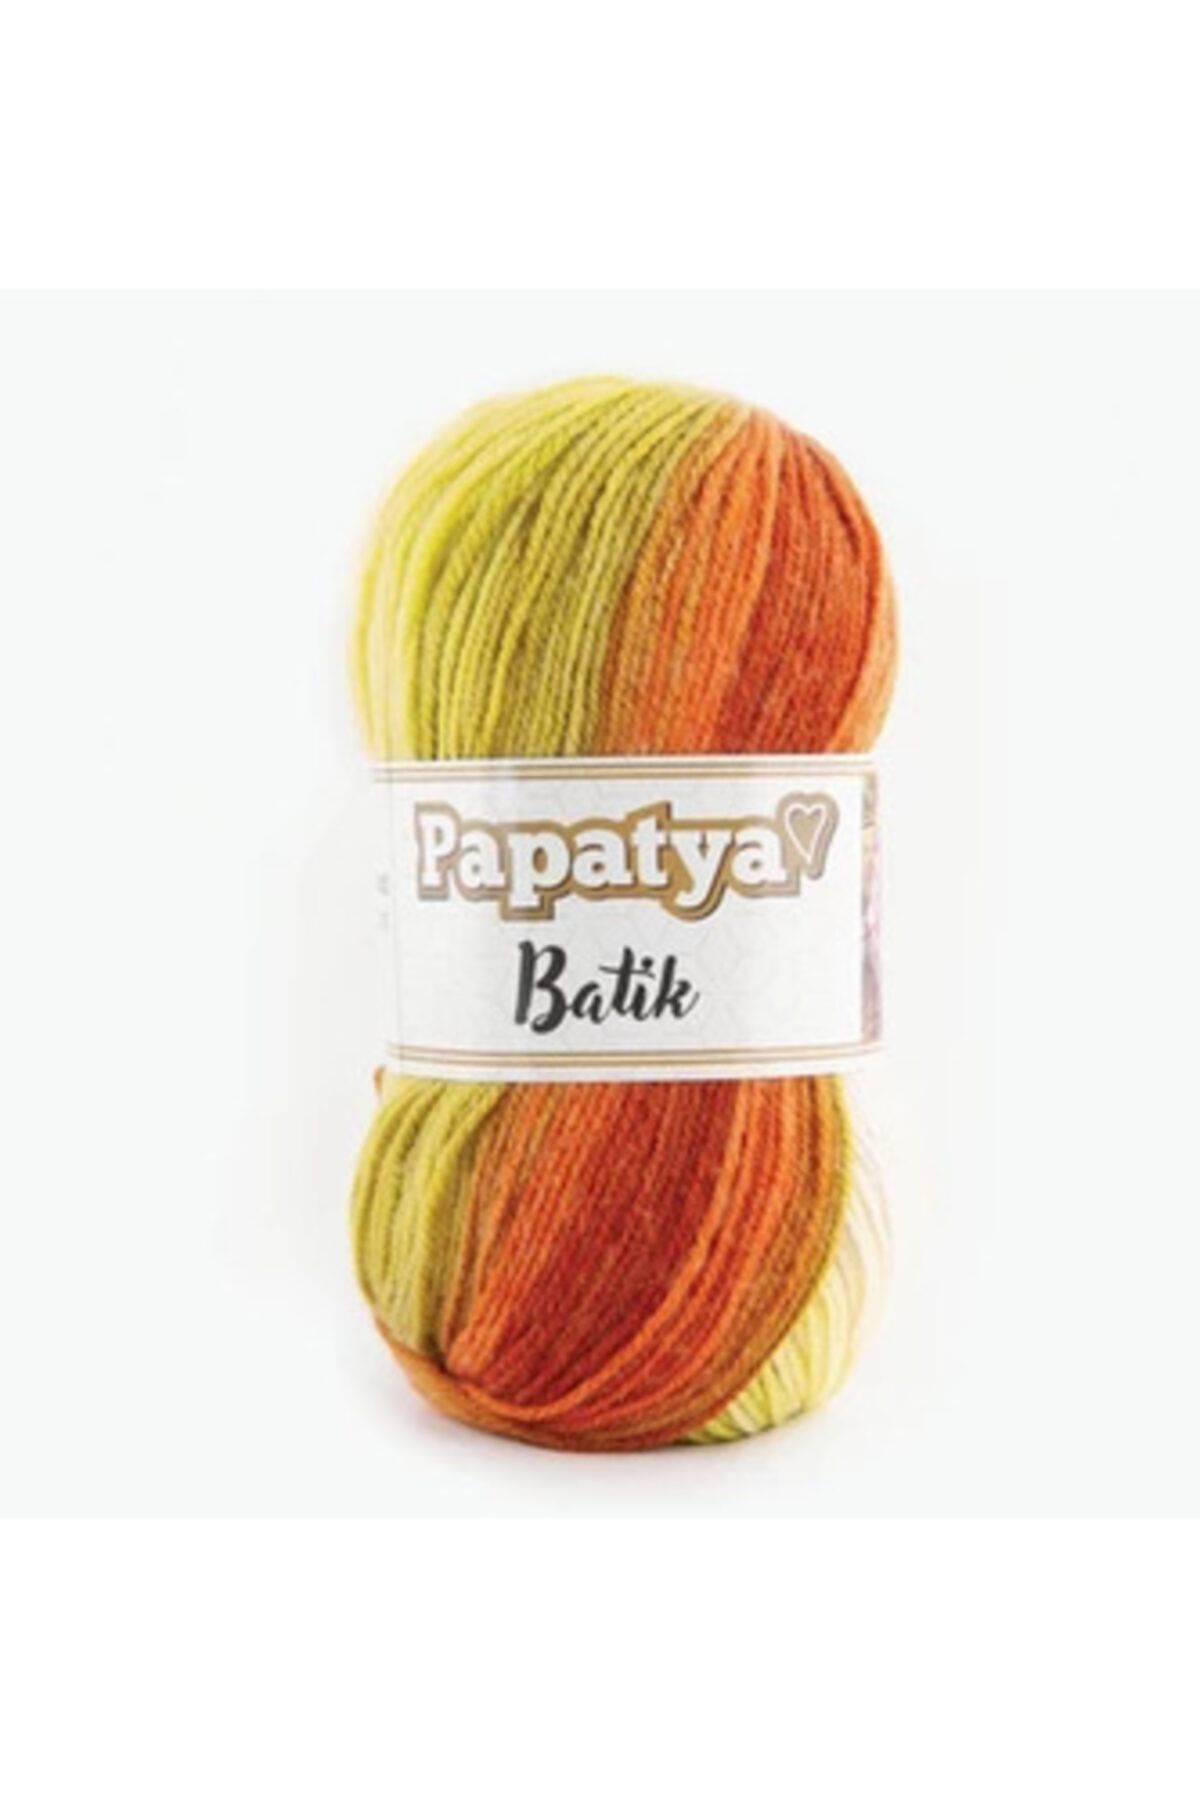 Papatya Batik Renkli Örgü Ipi